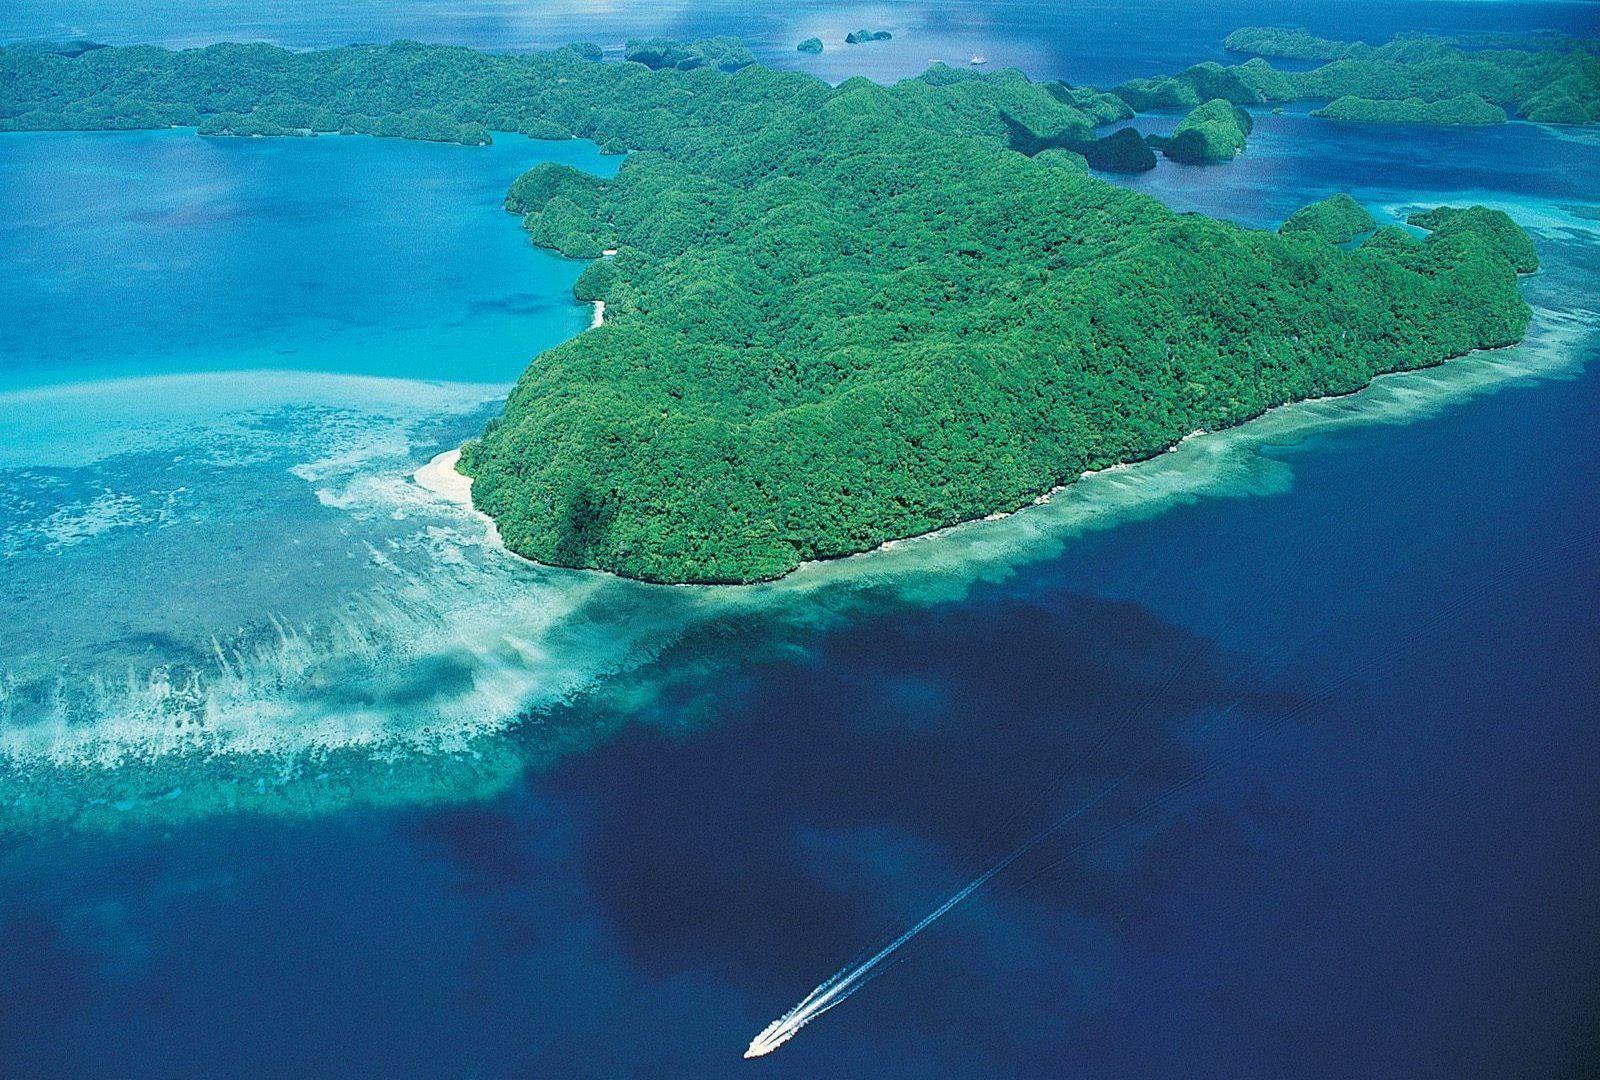 Palau Tag wallpapers Clouds Rocks Skies Green Landscape Ocean